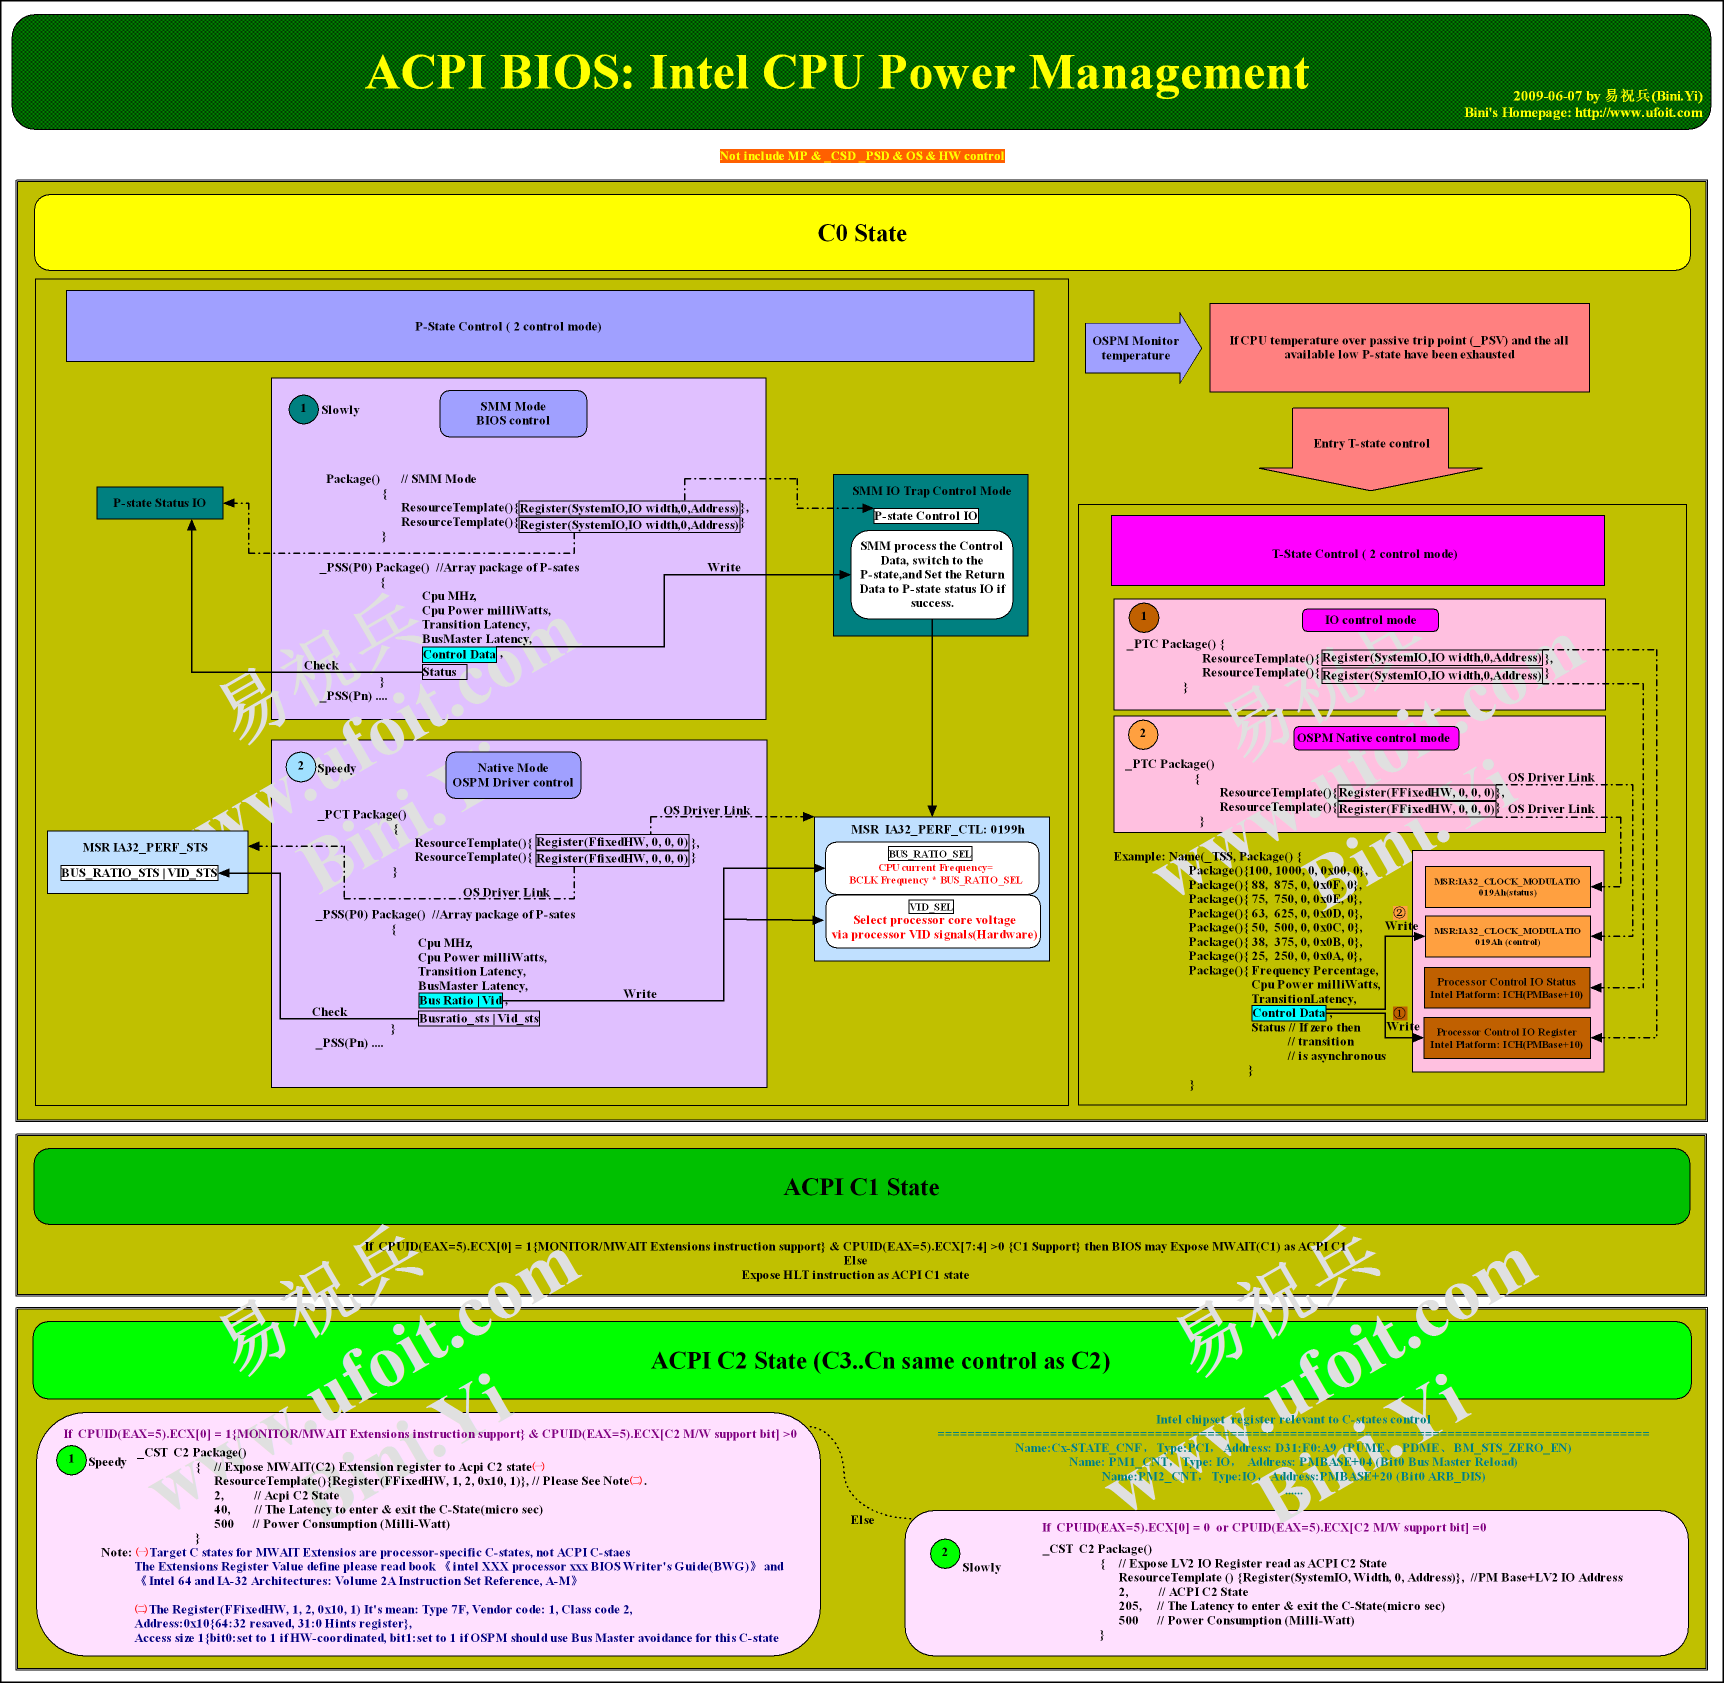 ACPI_BIOS_Intel_CPU_Power_Management.png